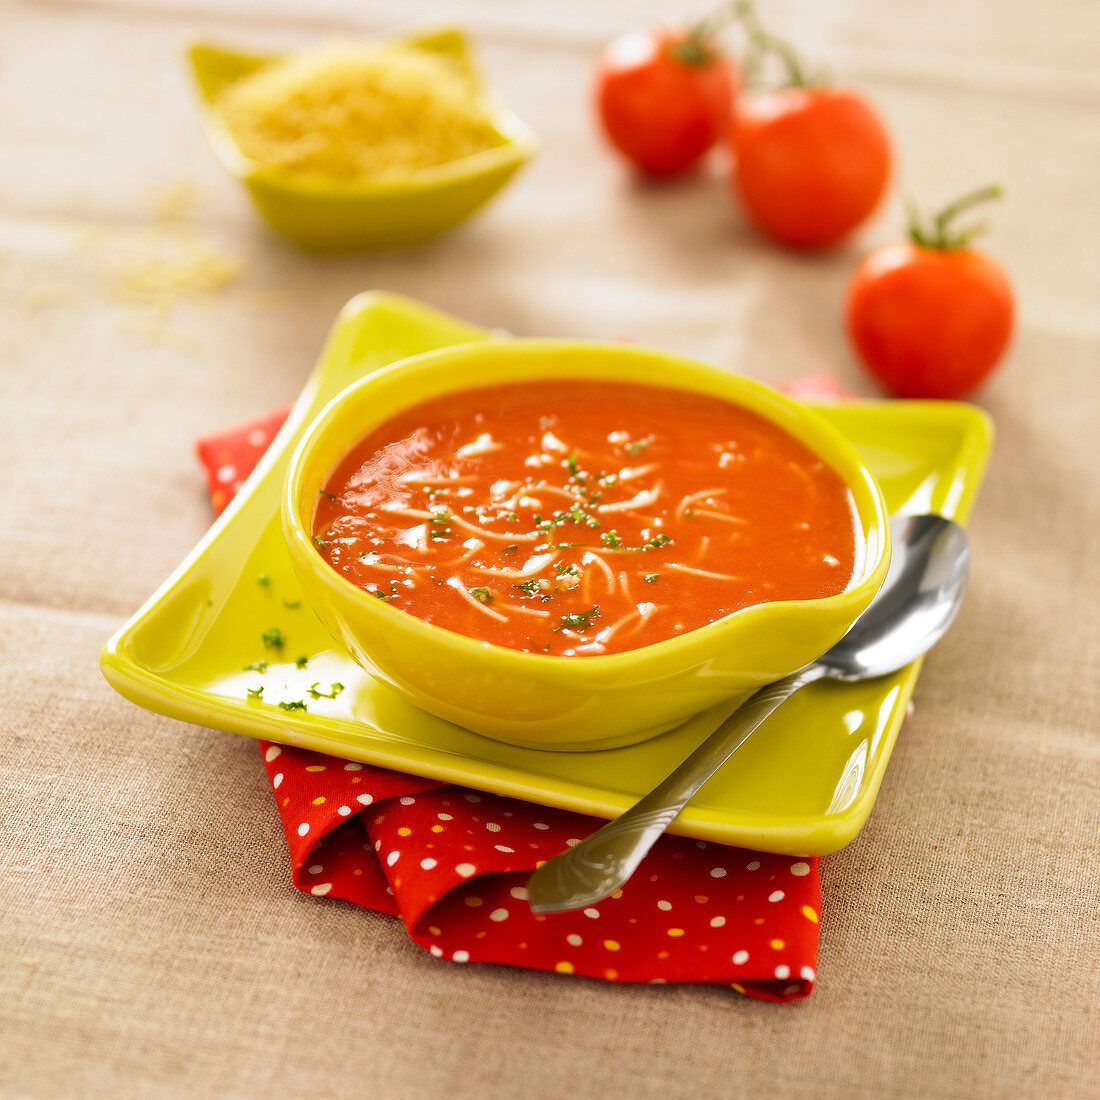 Tomato and vermicelli soup